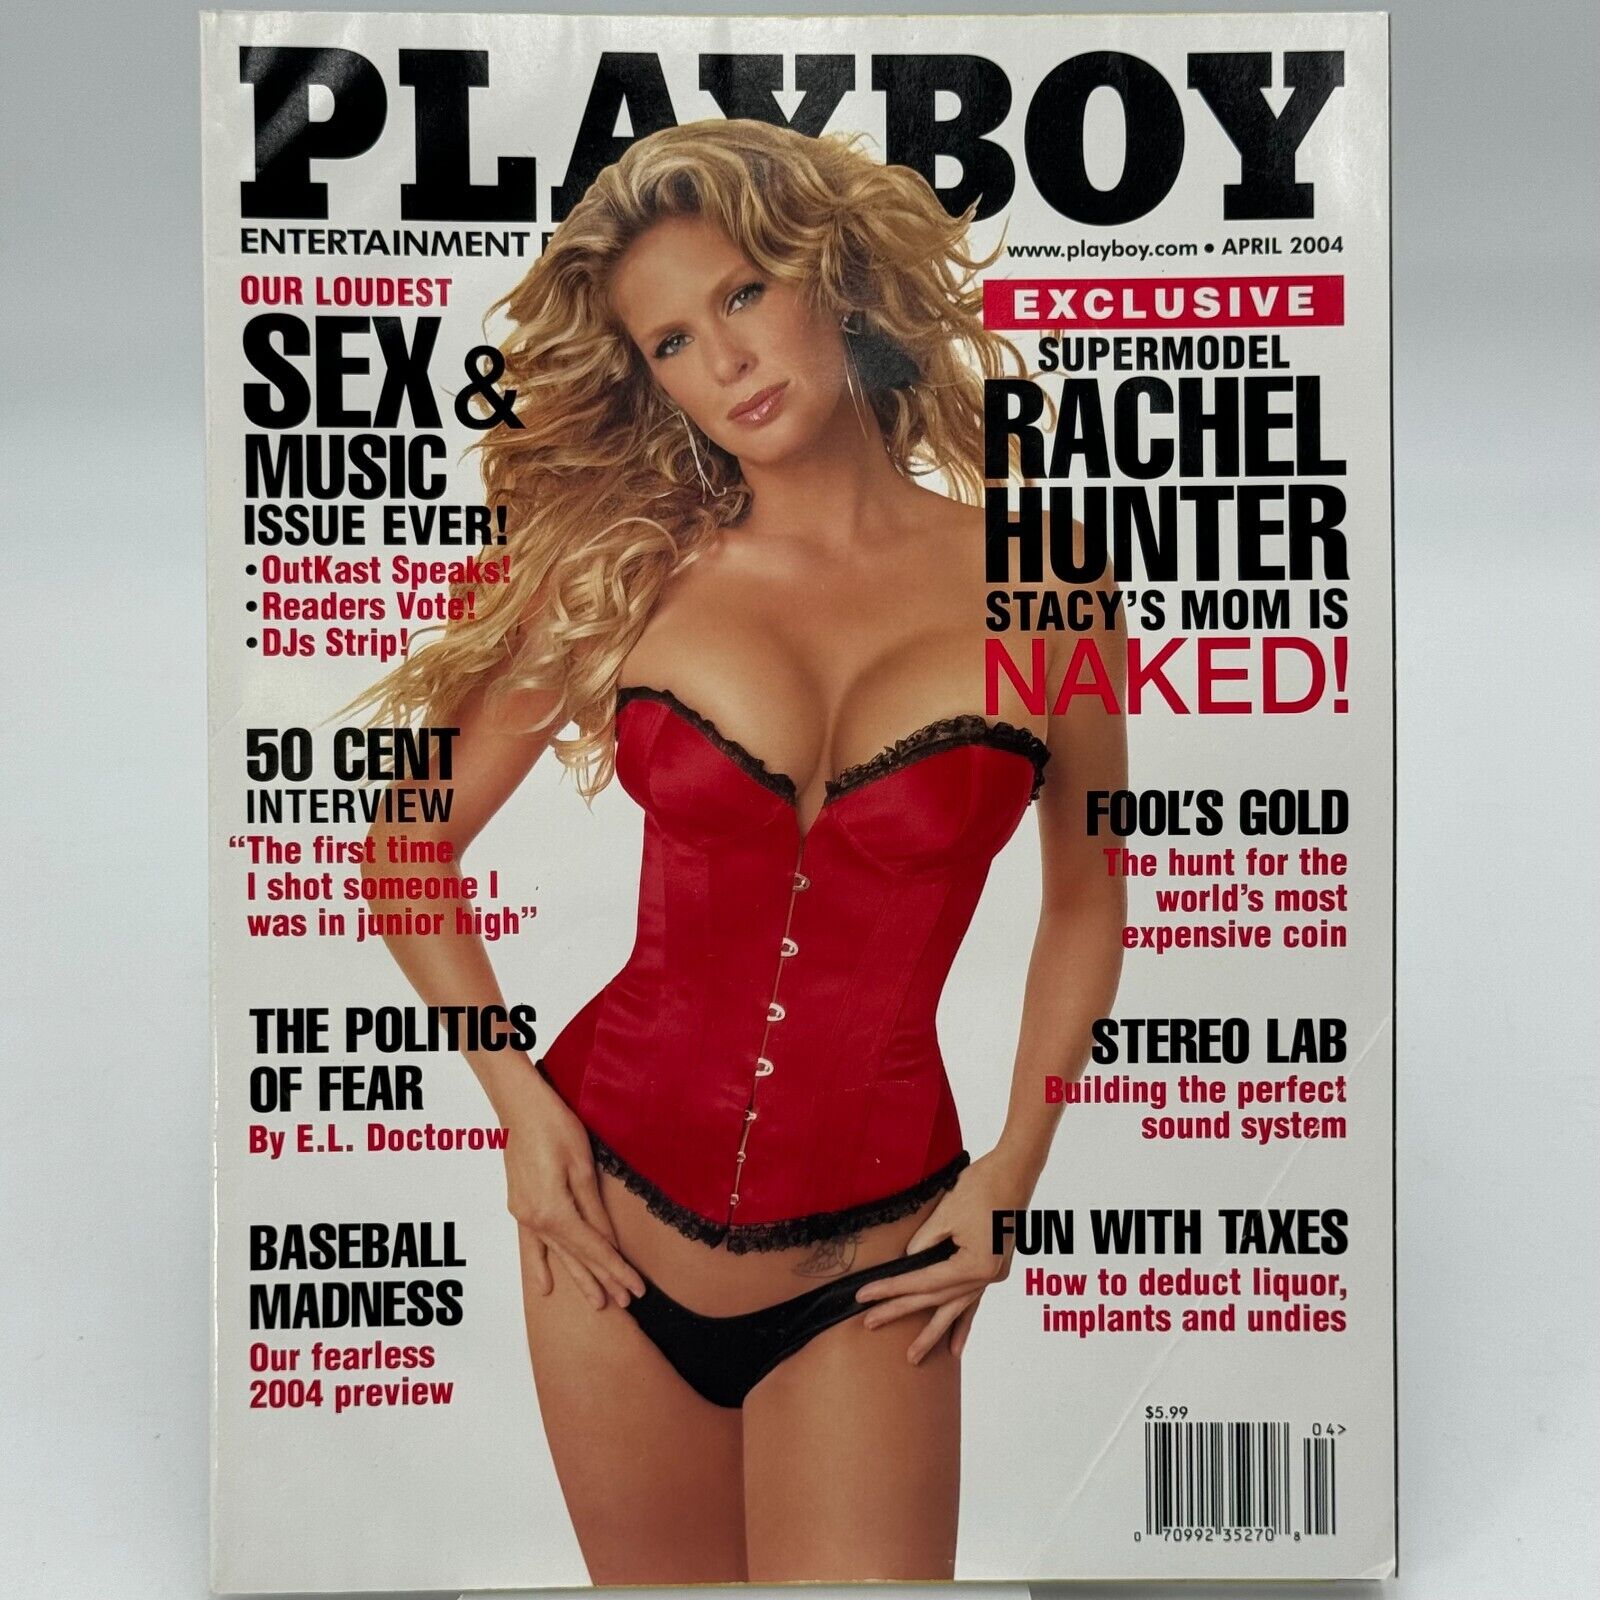 Playboy Lot of 7 2004 Issues Jaime Pressly WWE Sable Torrie Jim Carrey Pam